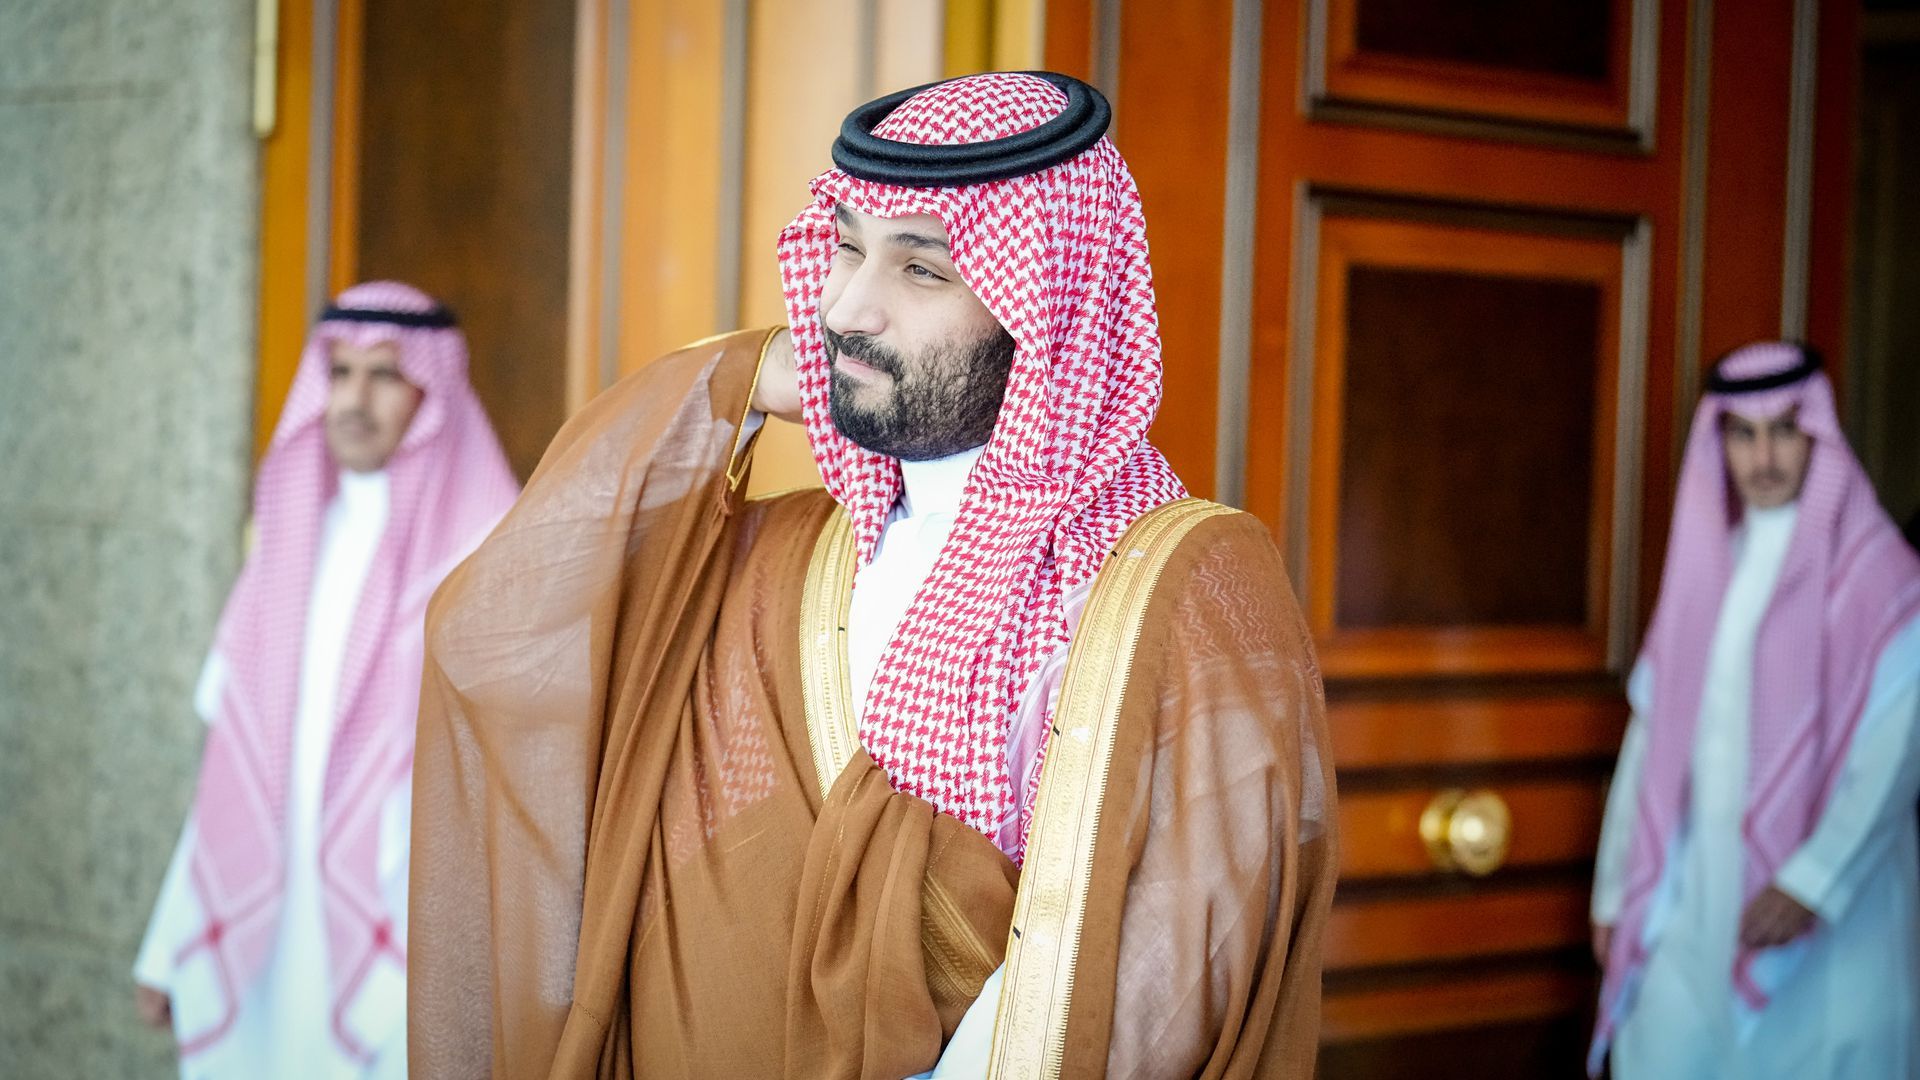 Mohammed bin Salman. Photo: Kay Nietfeld/picture alliance via Getty Images